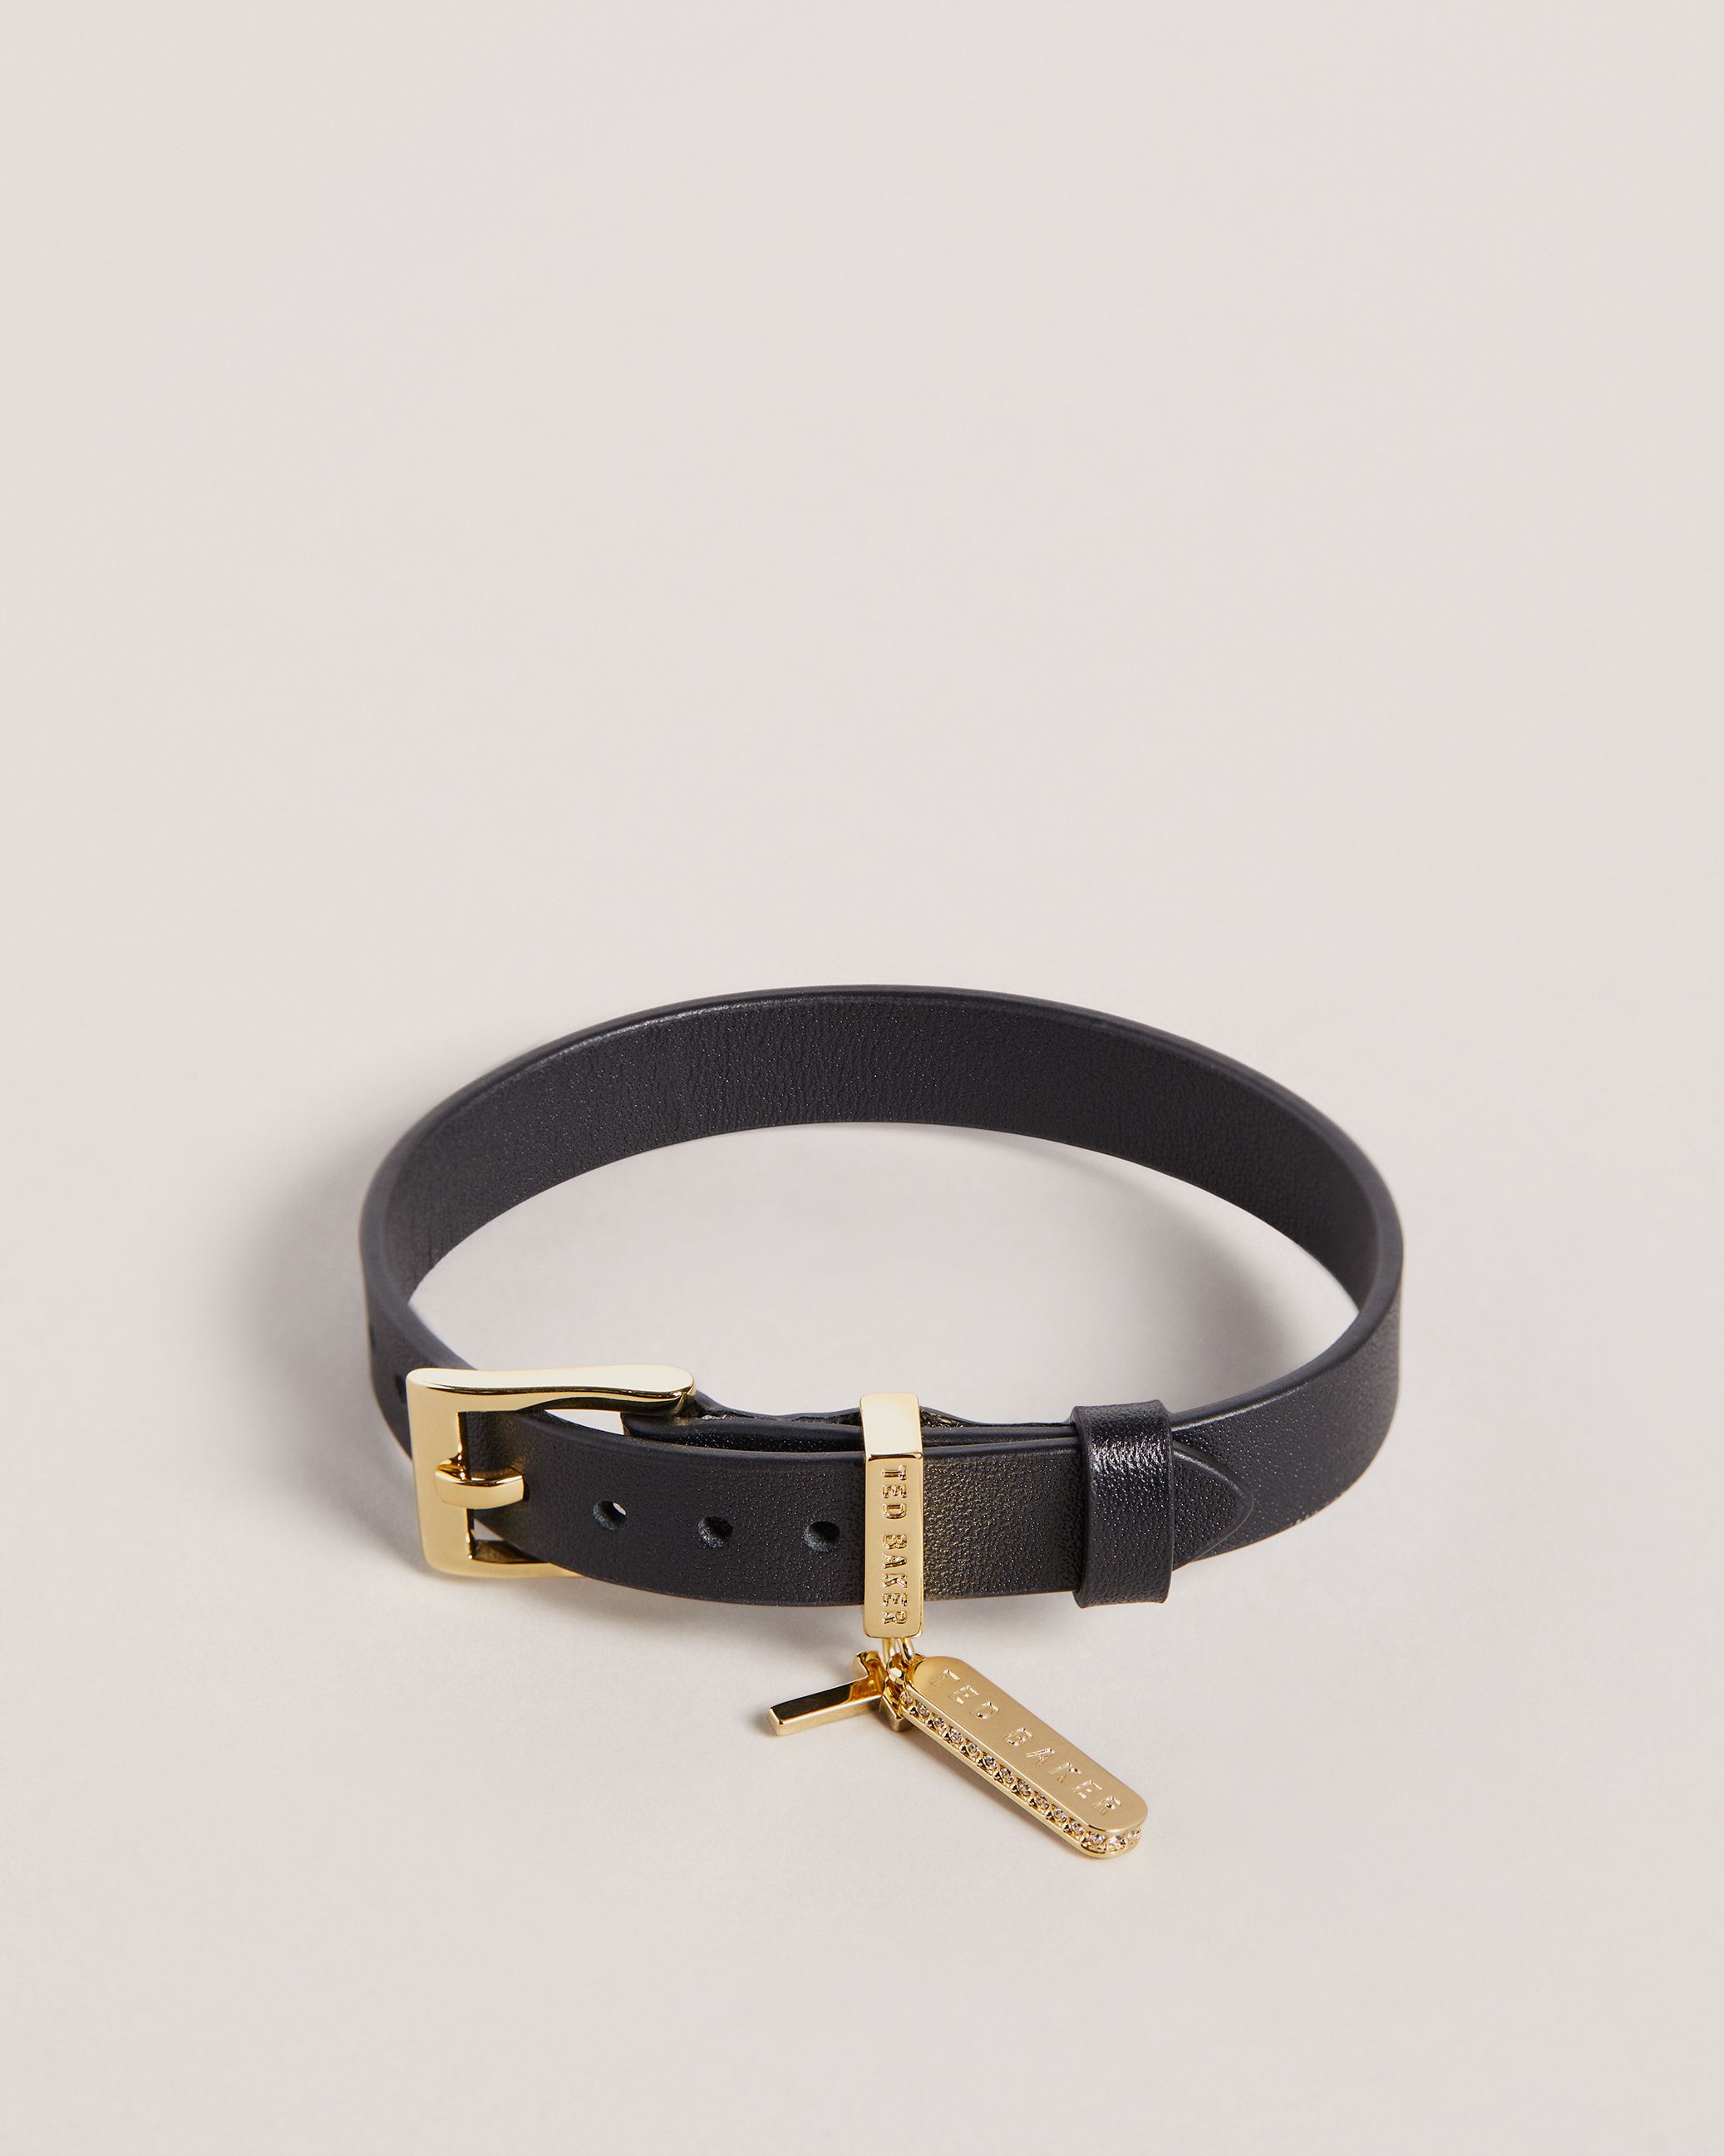 Tbj2991 Leather Bracelet